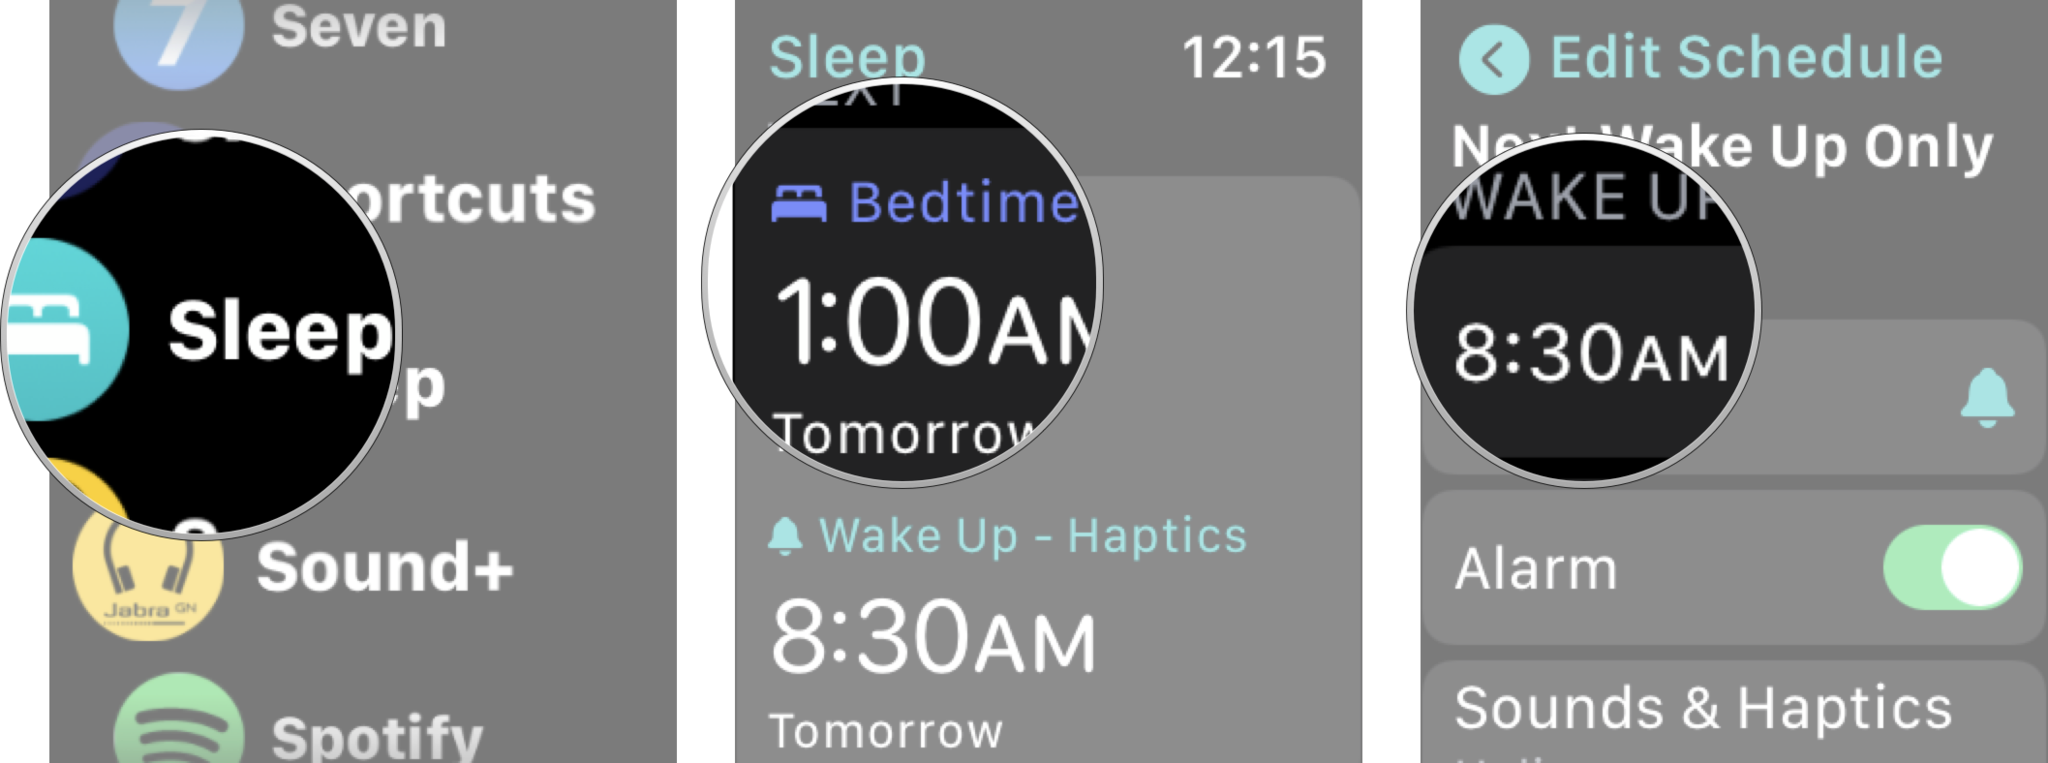 Edit Sleep Schedule In Sleep App On Apple Watch: :Launch the Sleep app on your Apple Watch, tap the sleep schedule you want to edit, and then tap the way up time to adjust it. 